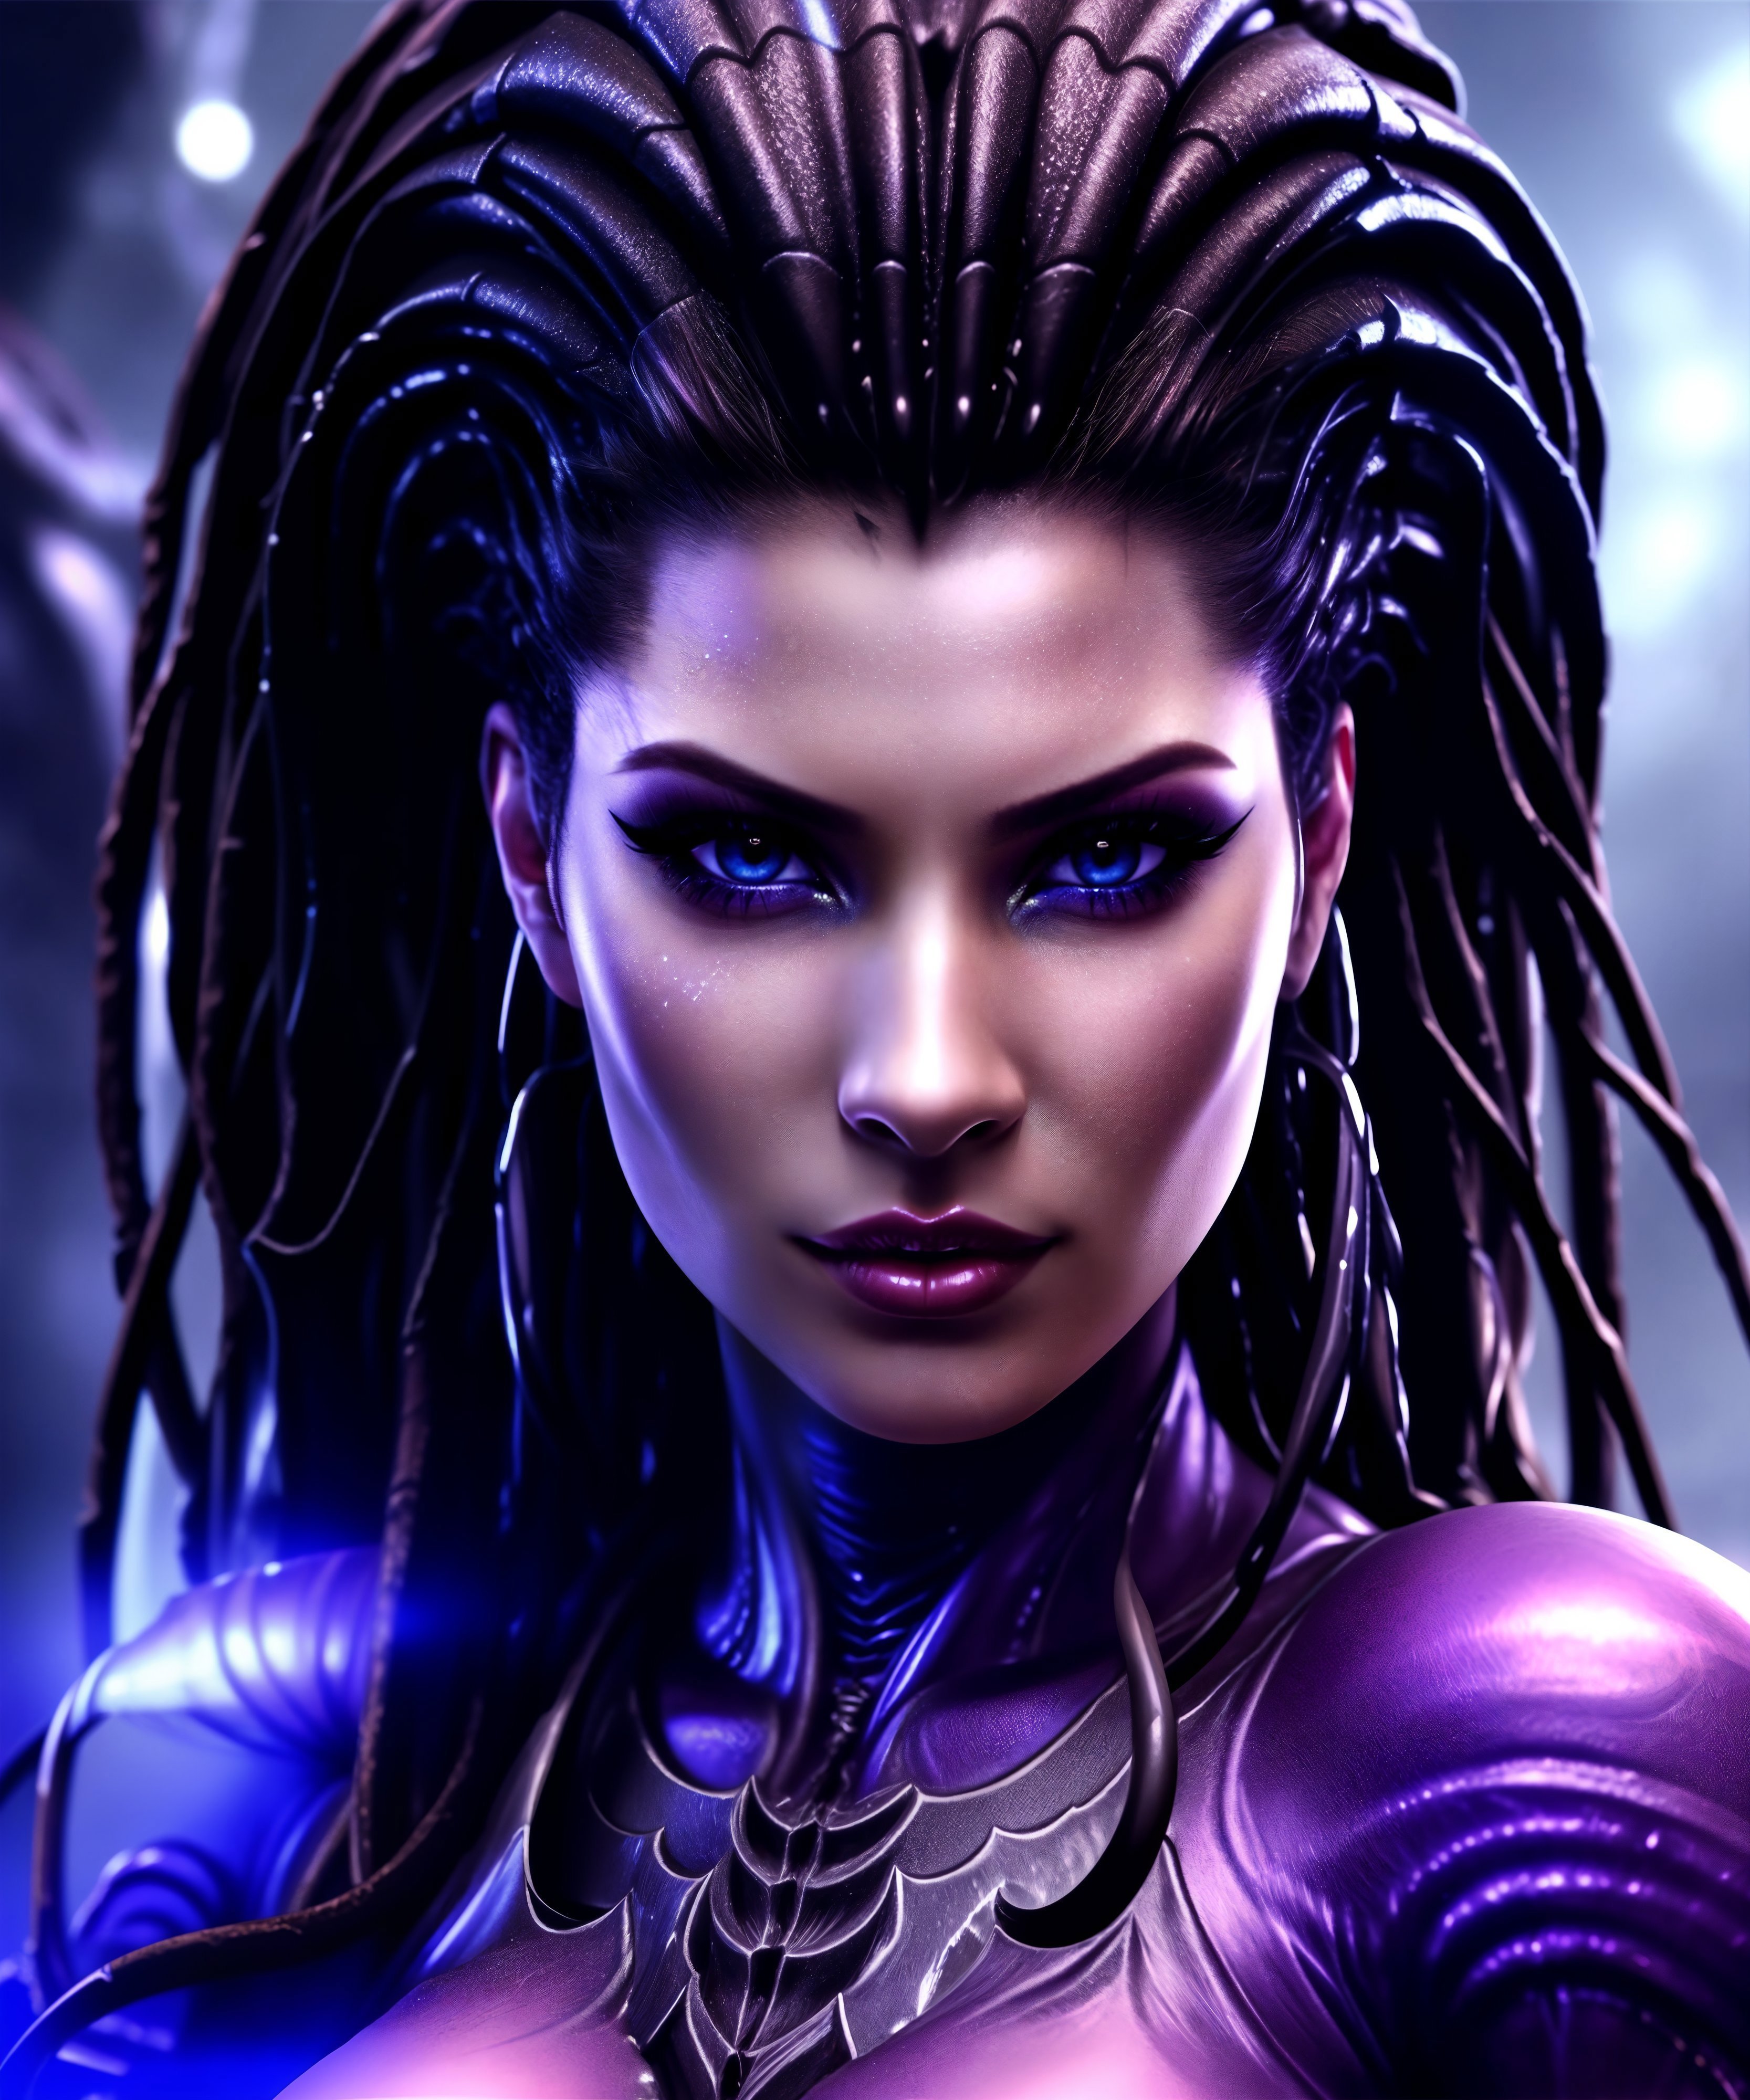 Sarah Kerrigan - StarCraft [ Queen of Blades ] image by Digital_Art_AI